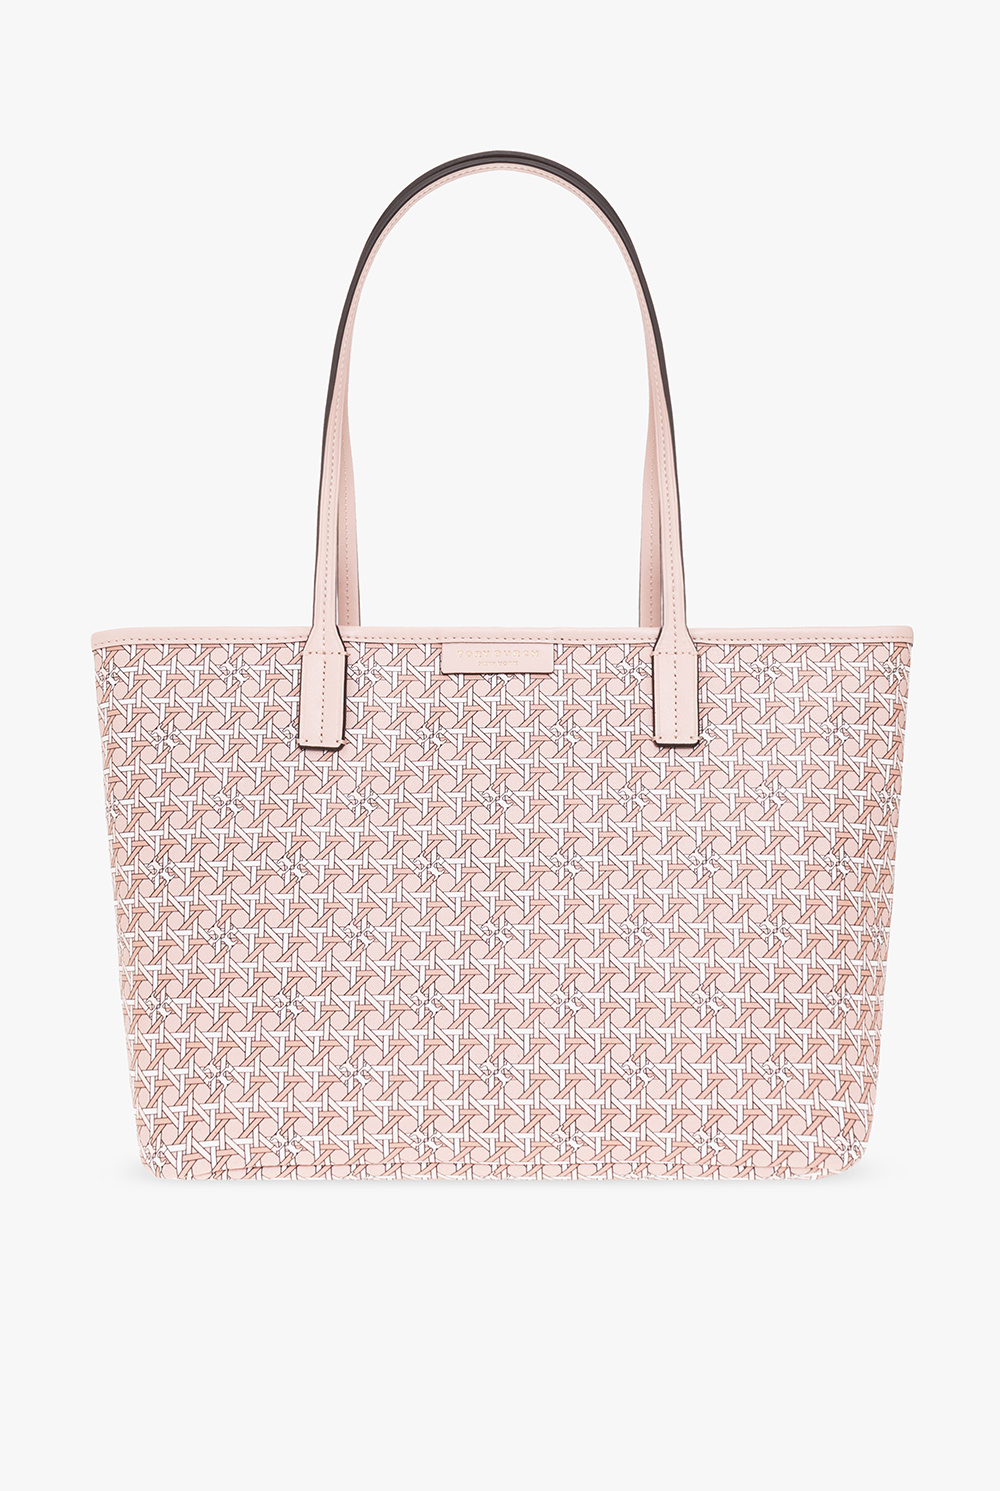 Tory Burch 'Basketweave' Shopper Bag - Pink - ShopStyle